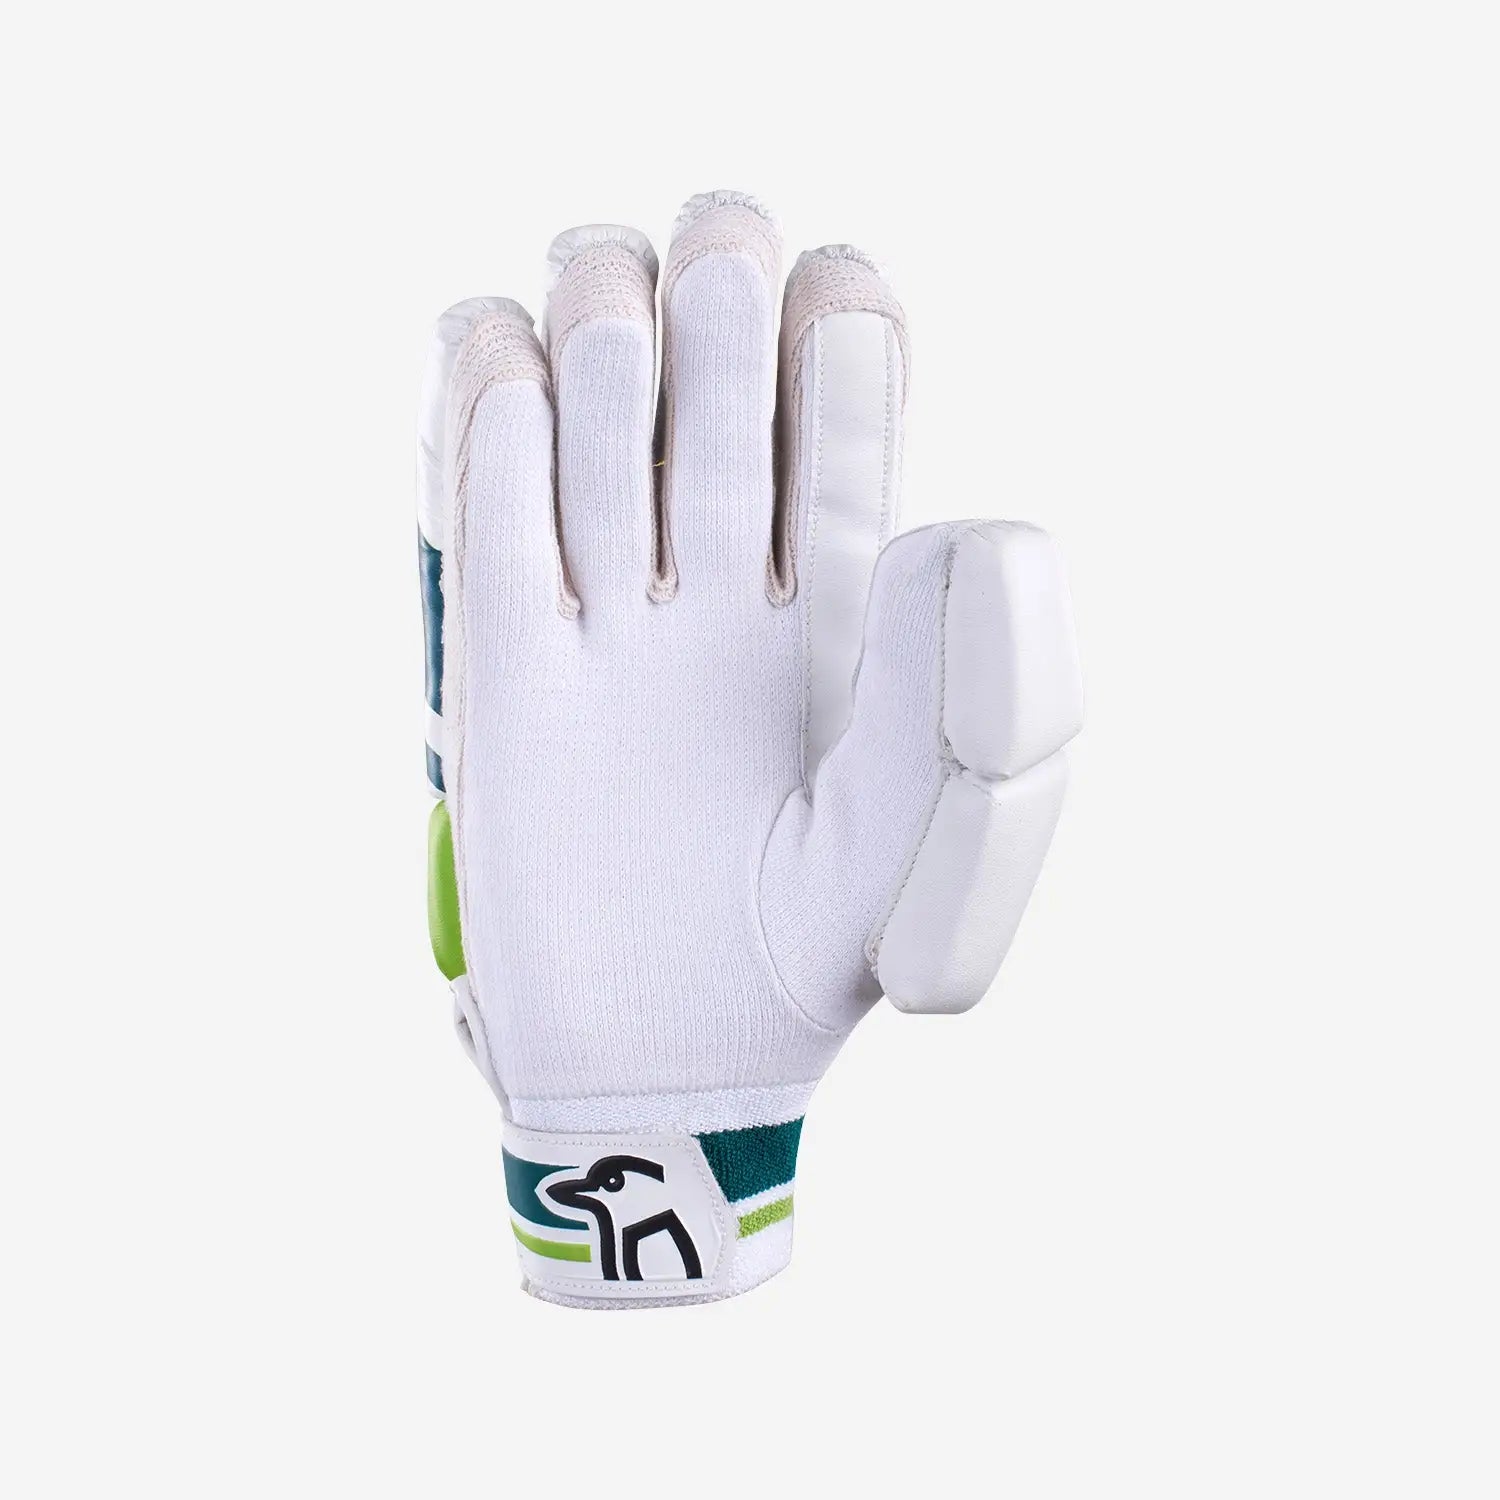 Kookaburra KAHUNA 6.1 Cricket Batting Gloves Comfort and Protection - GLOVE - BATTING